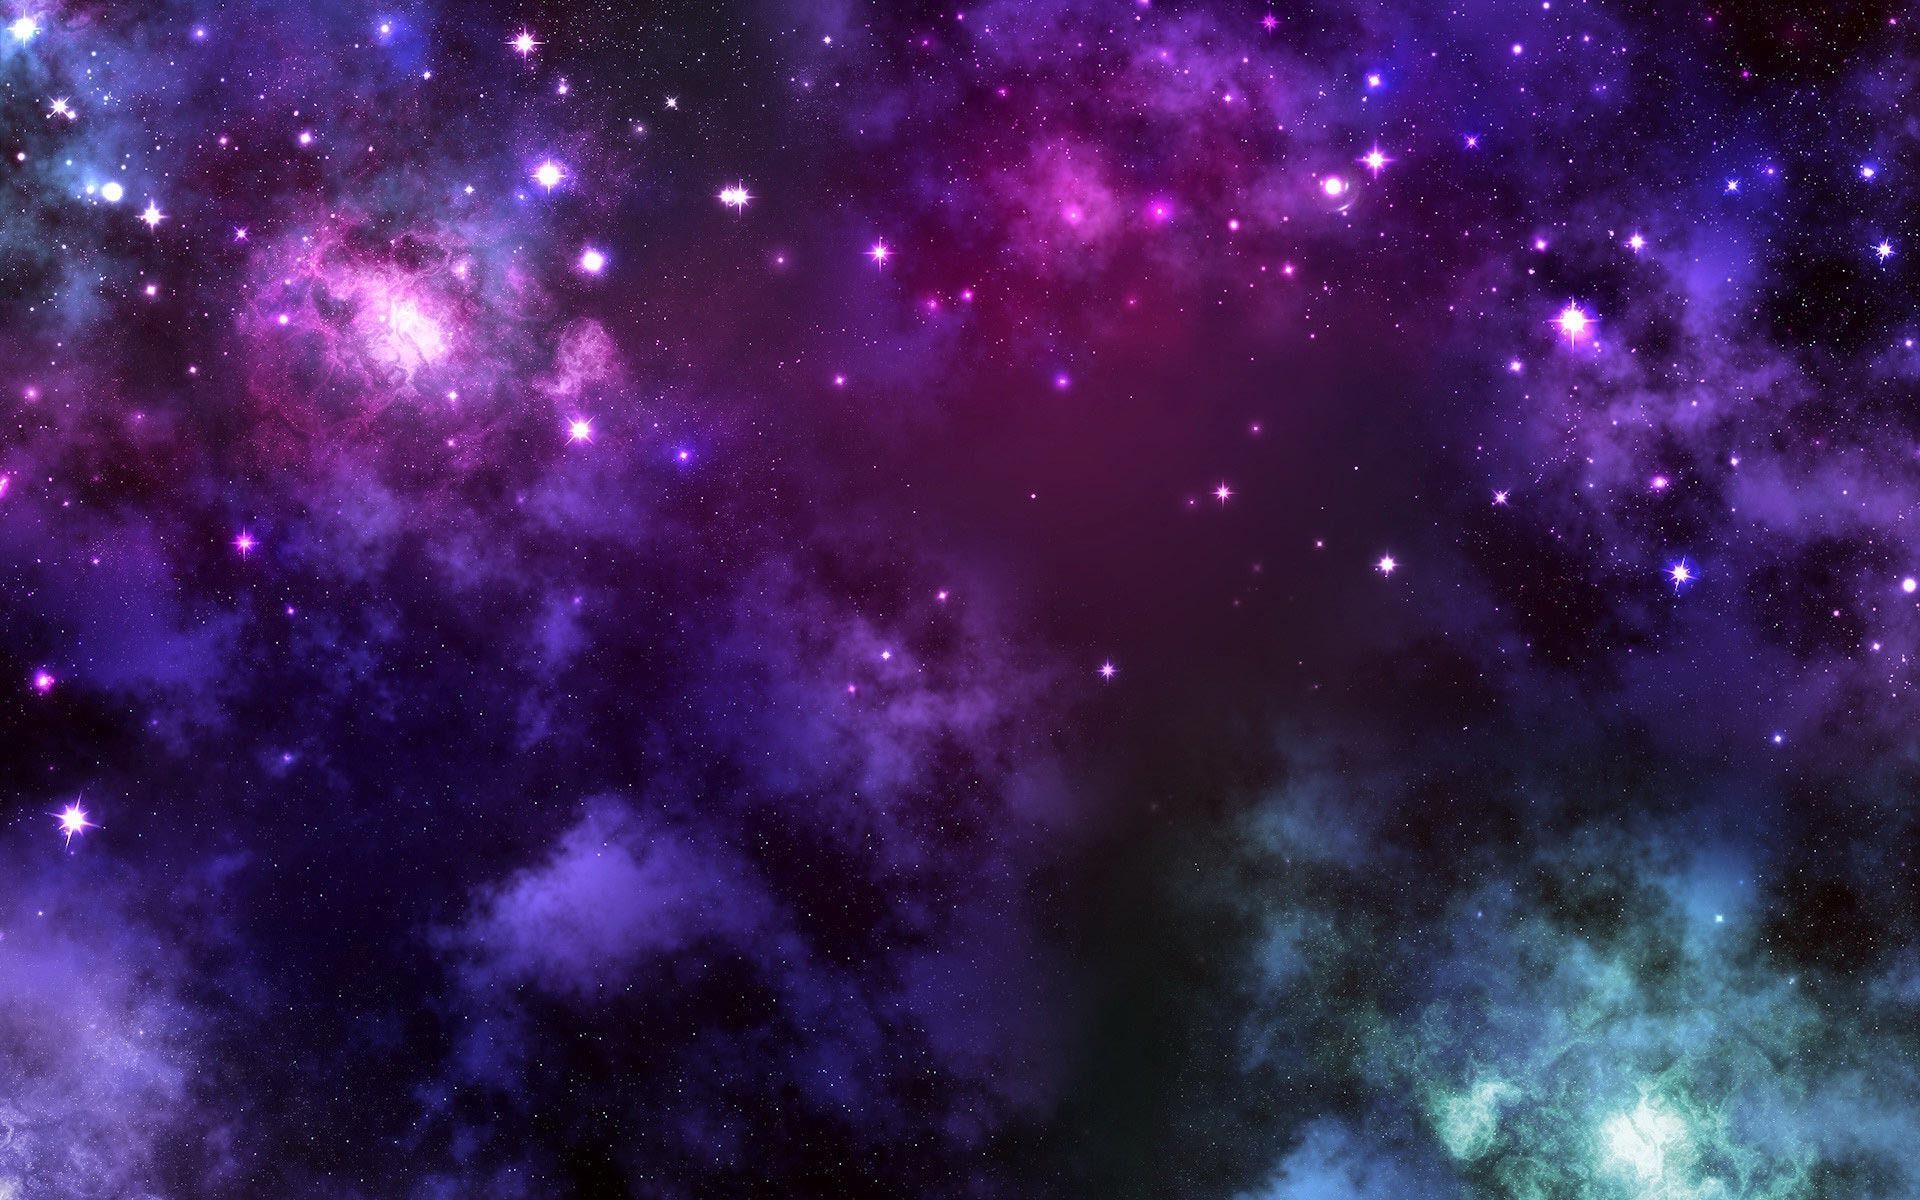 Purple Galaxy Wallpaper 1080p For Desktop Wallpaper 1920 x 1200 px